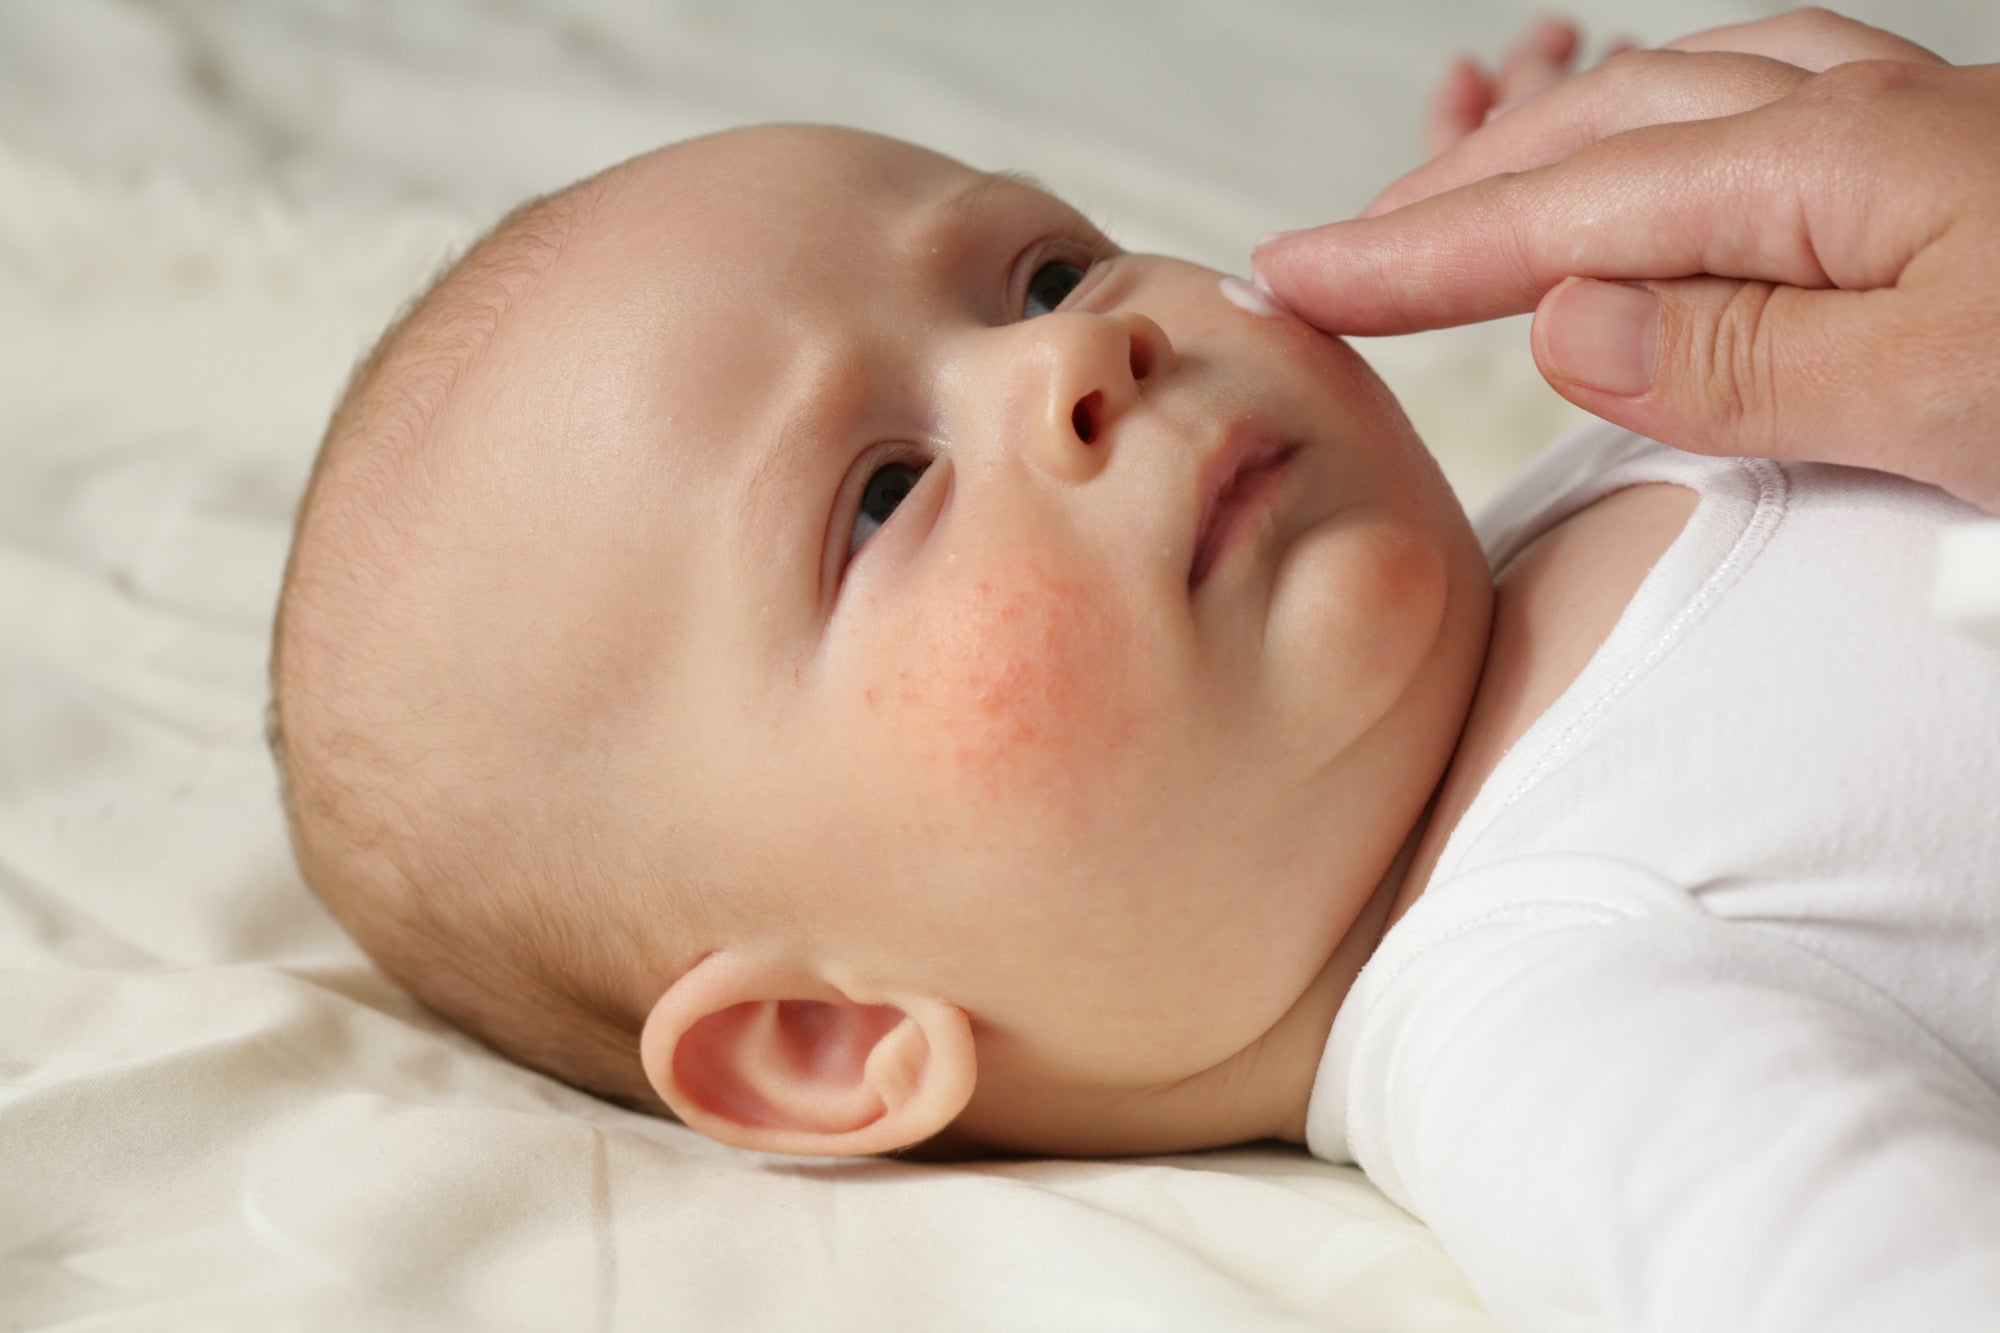 parent putting moisturizer on a child's skin condition